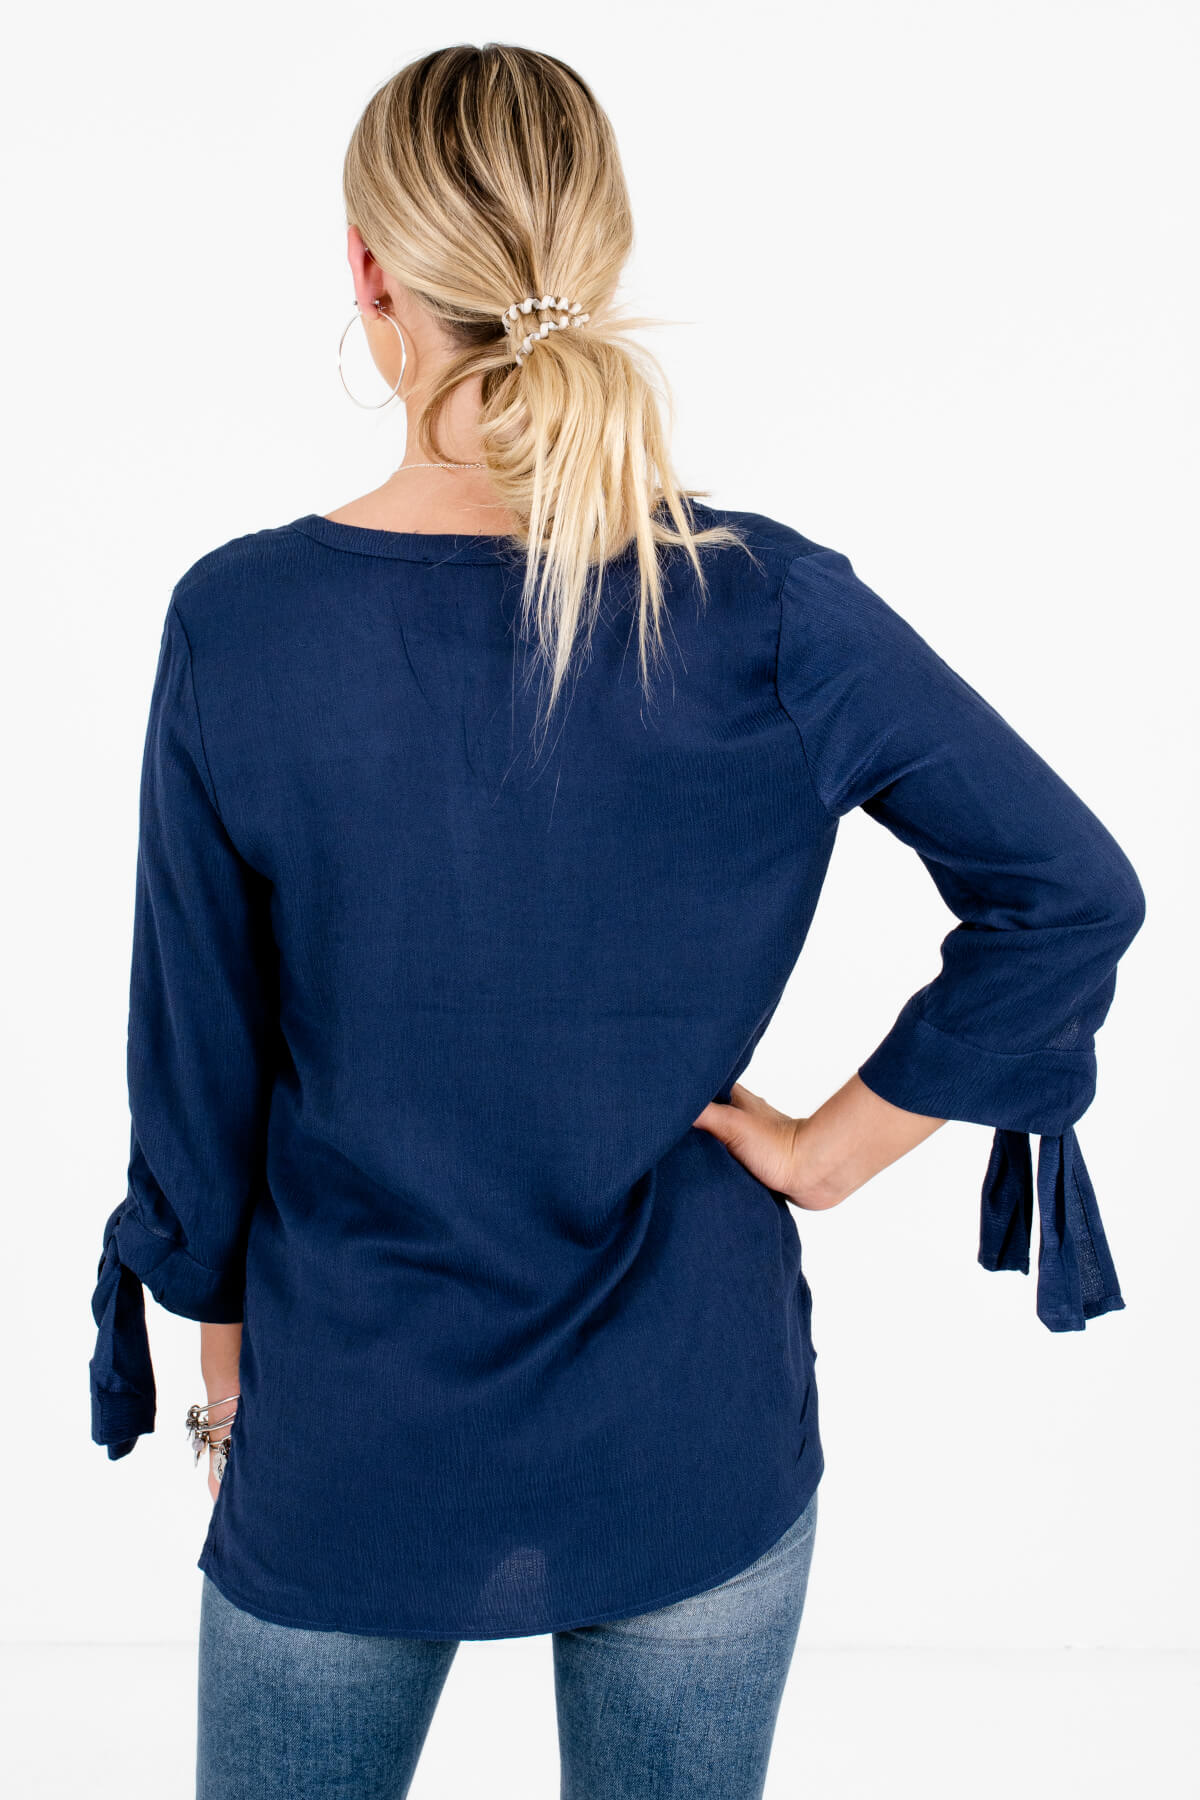 Women’s Navy Blue Self-Tie Sleeve Boutique Blouse